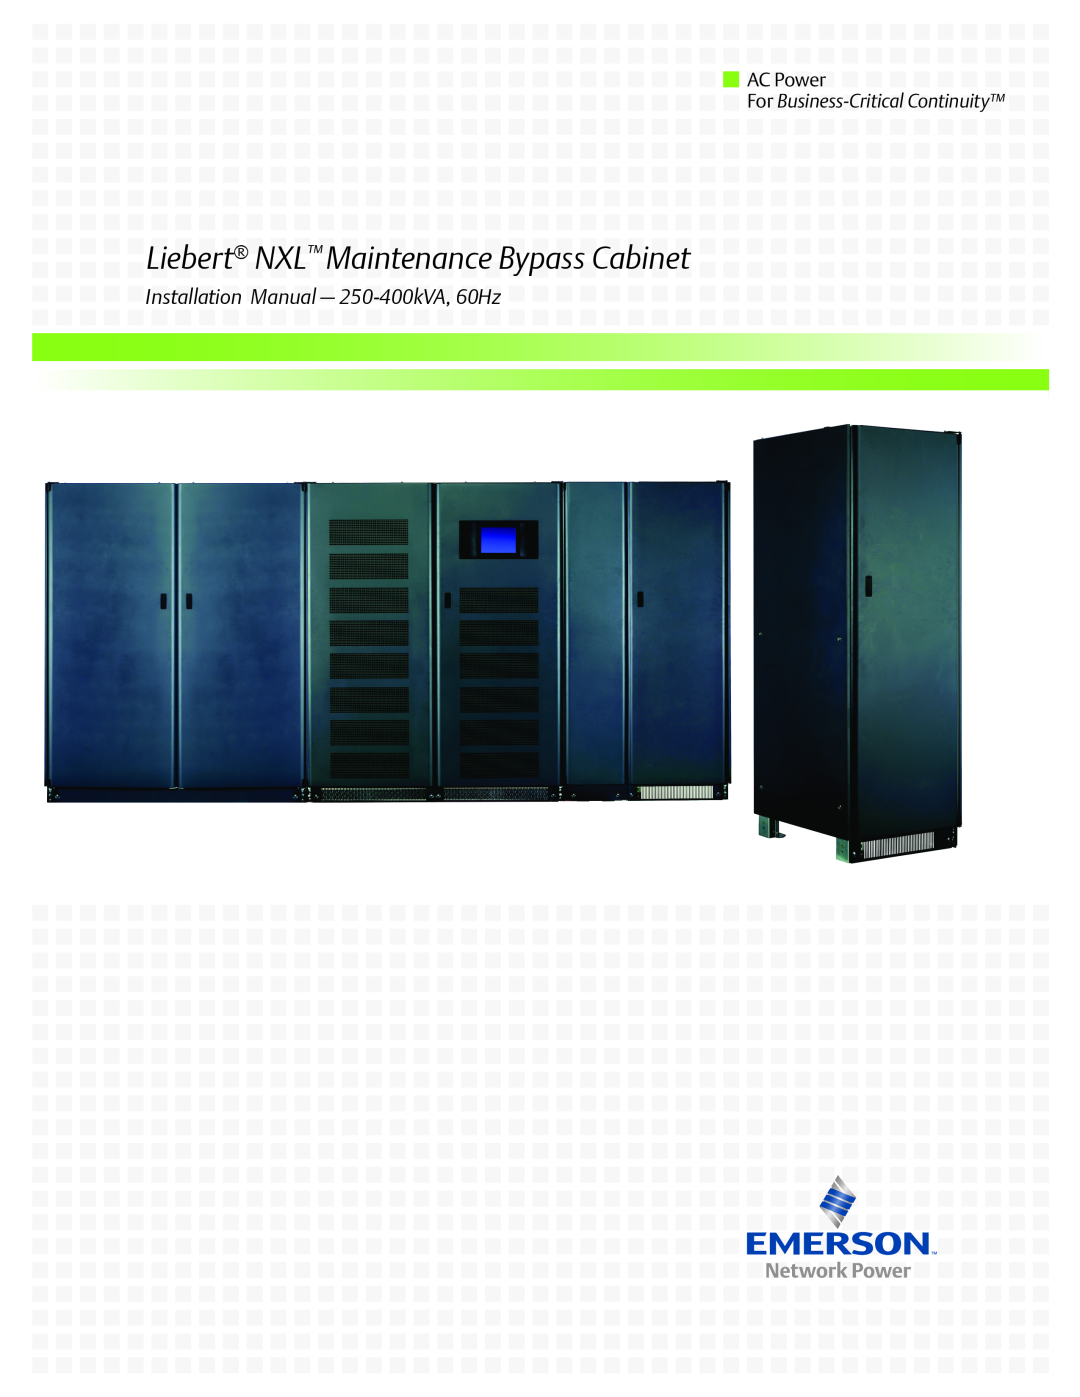 Emerson UPS Systems installation manual Liebert NXL Maintenance BypassCabinet, Installation Manual - 250-400kVA, 60Hz 